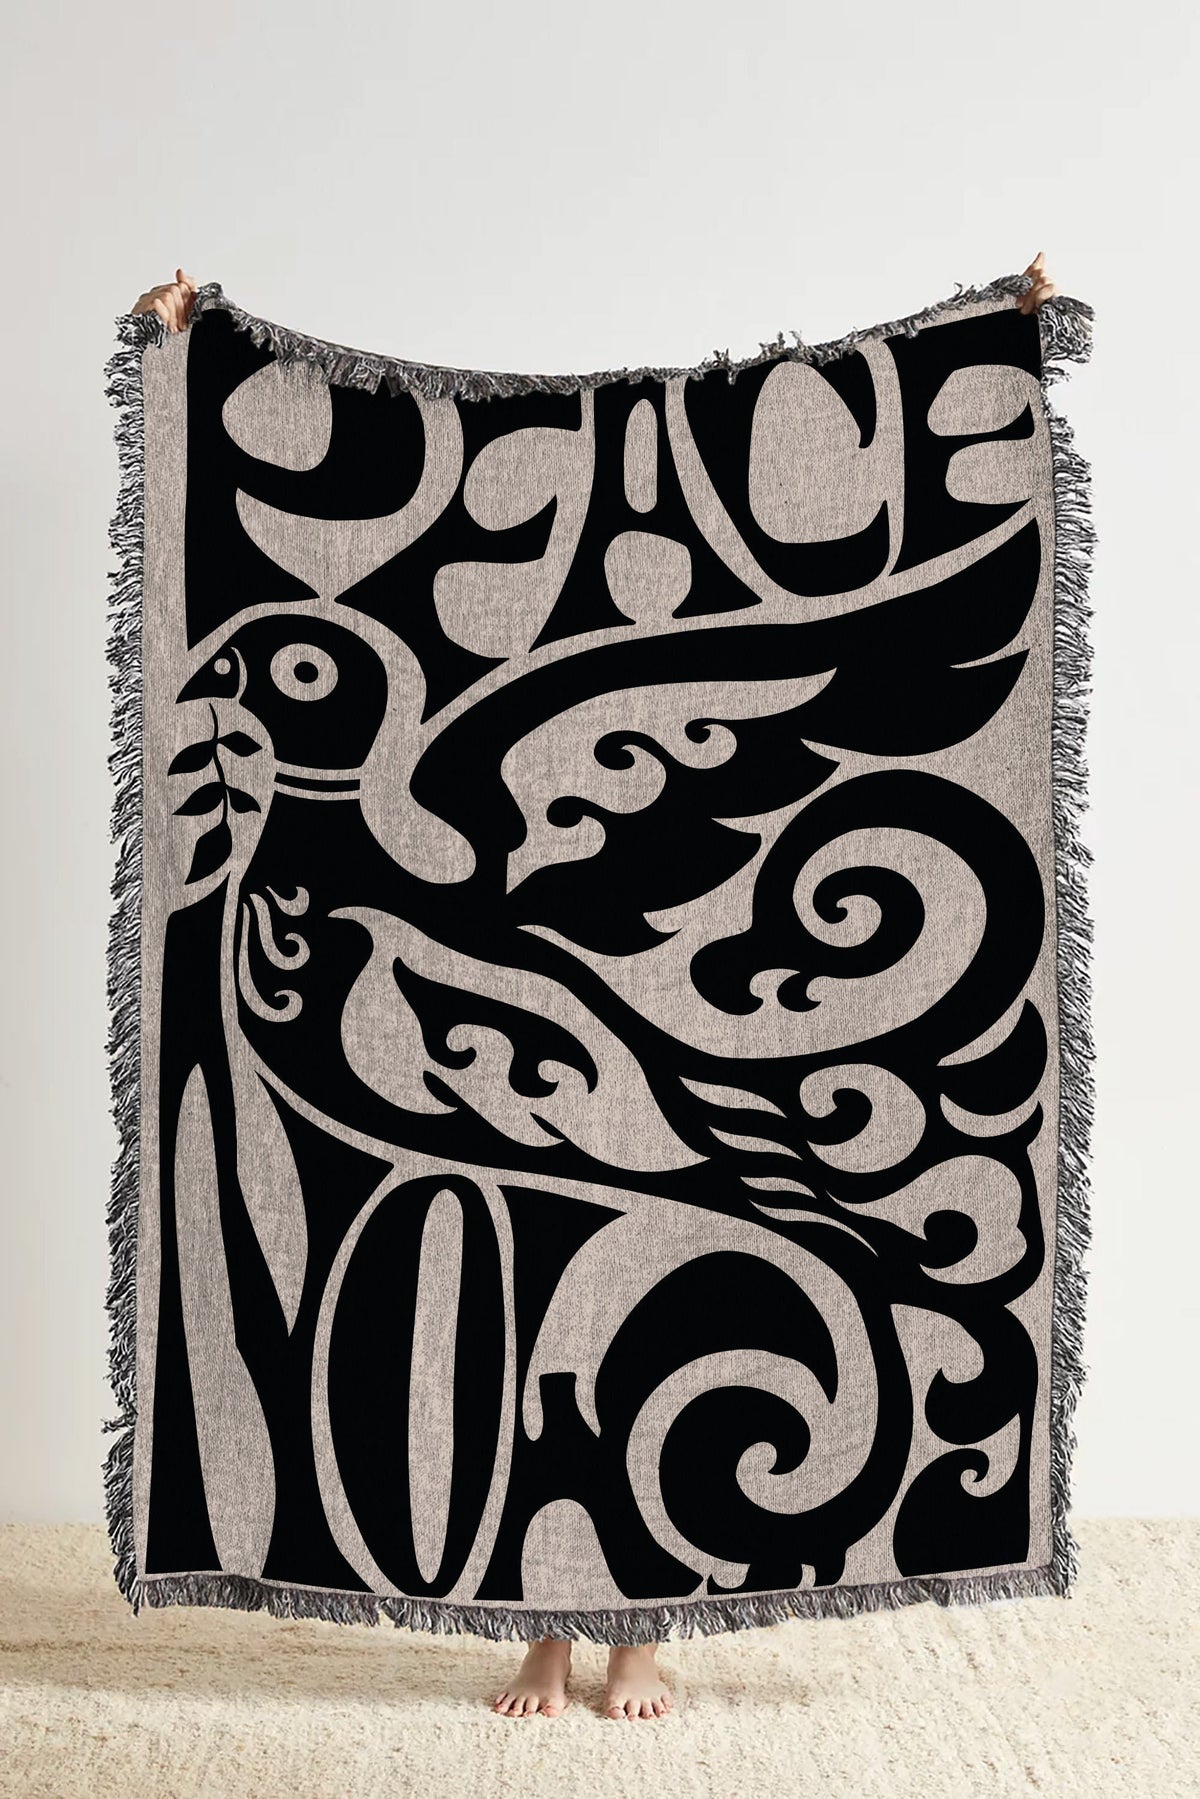 PEACE NOW 1960s  Throw Blanket